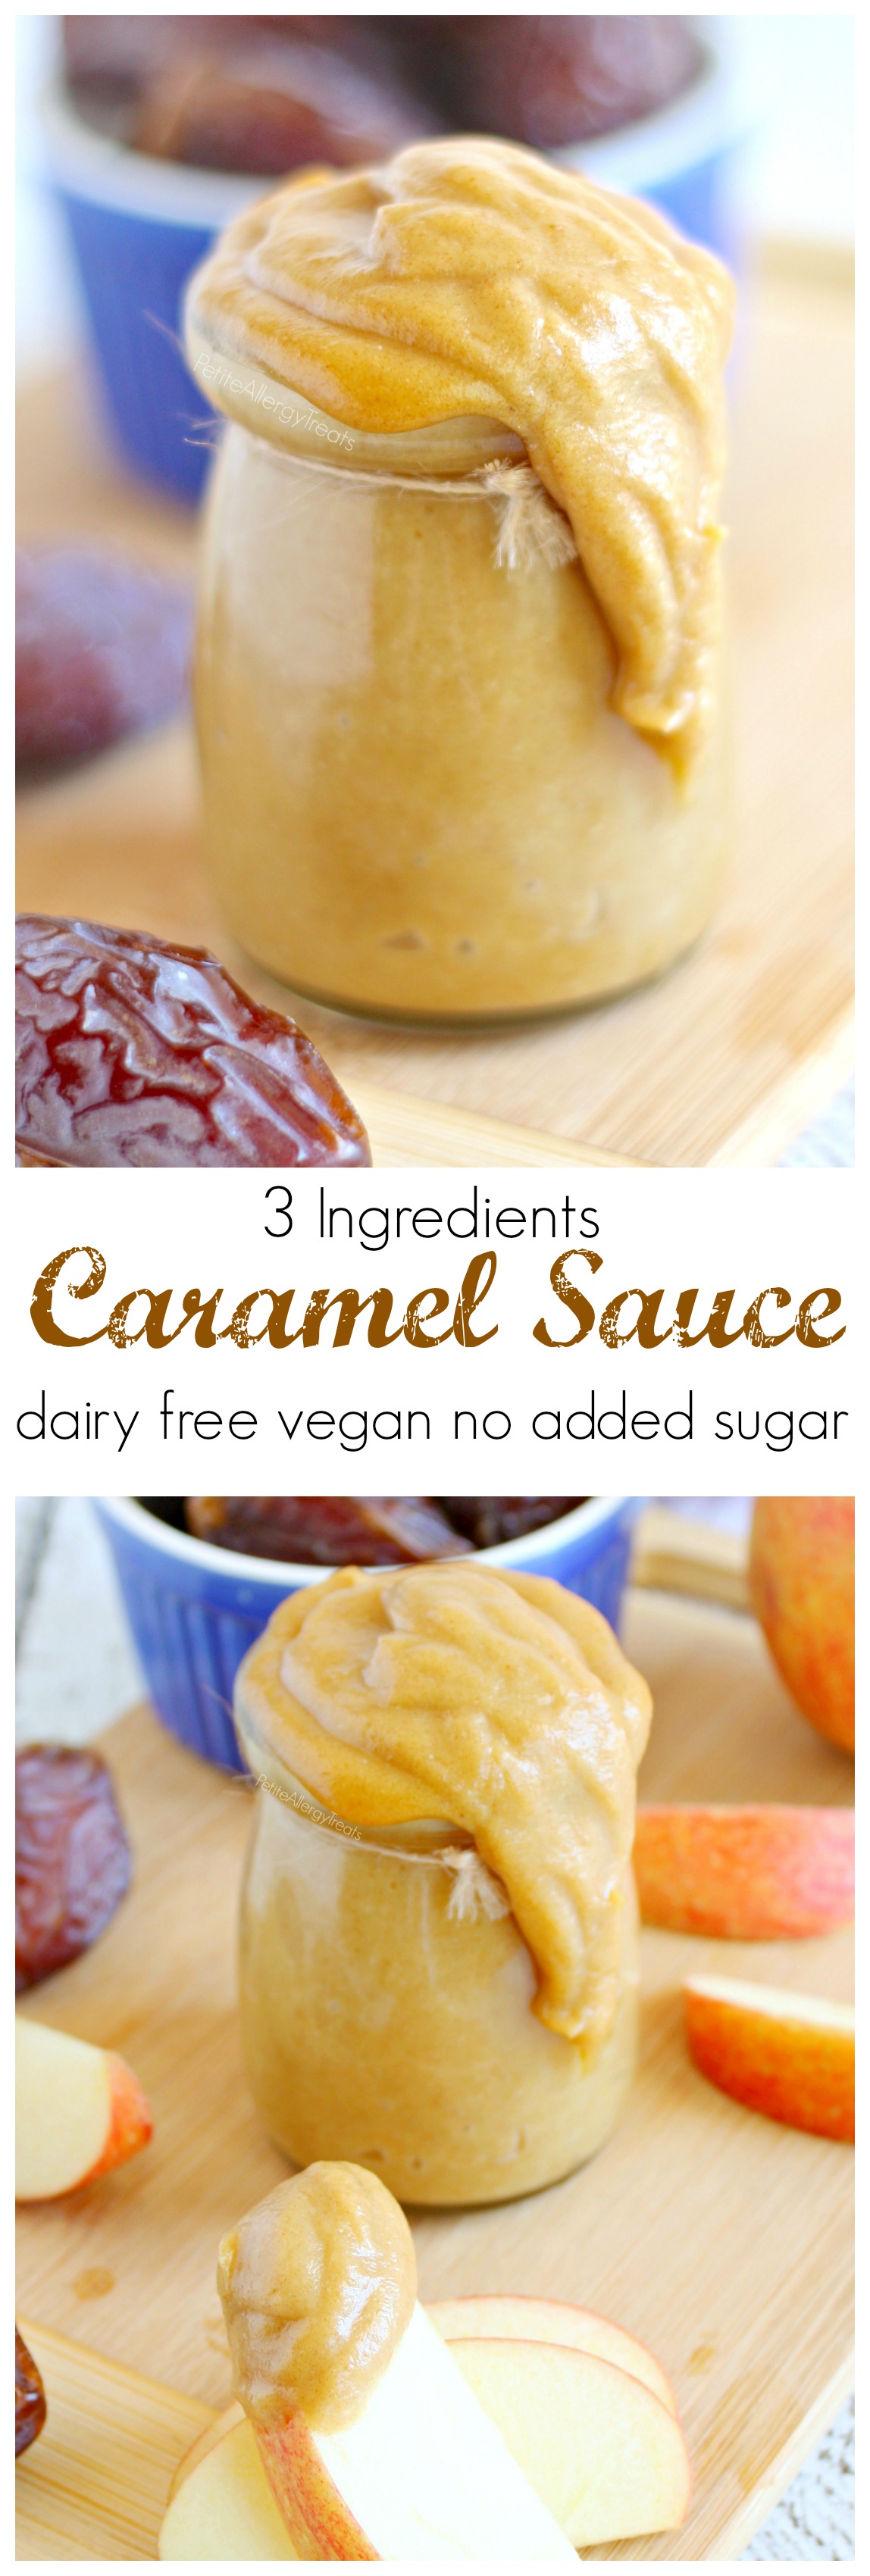 Caramel  Sauce (dairy free vegan) Just 3 ingredients make this an easy healthy sauce!